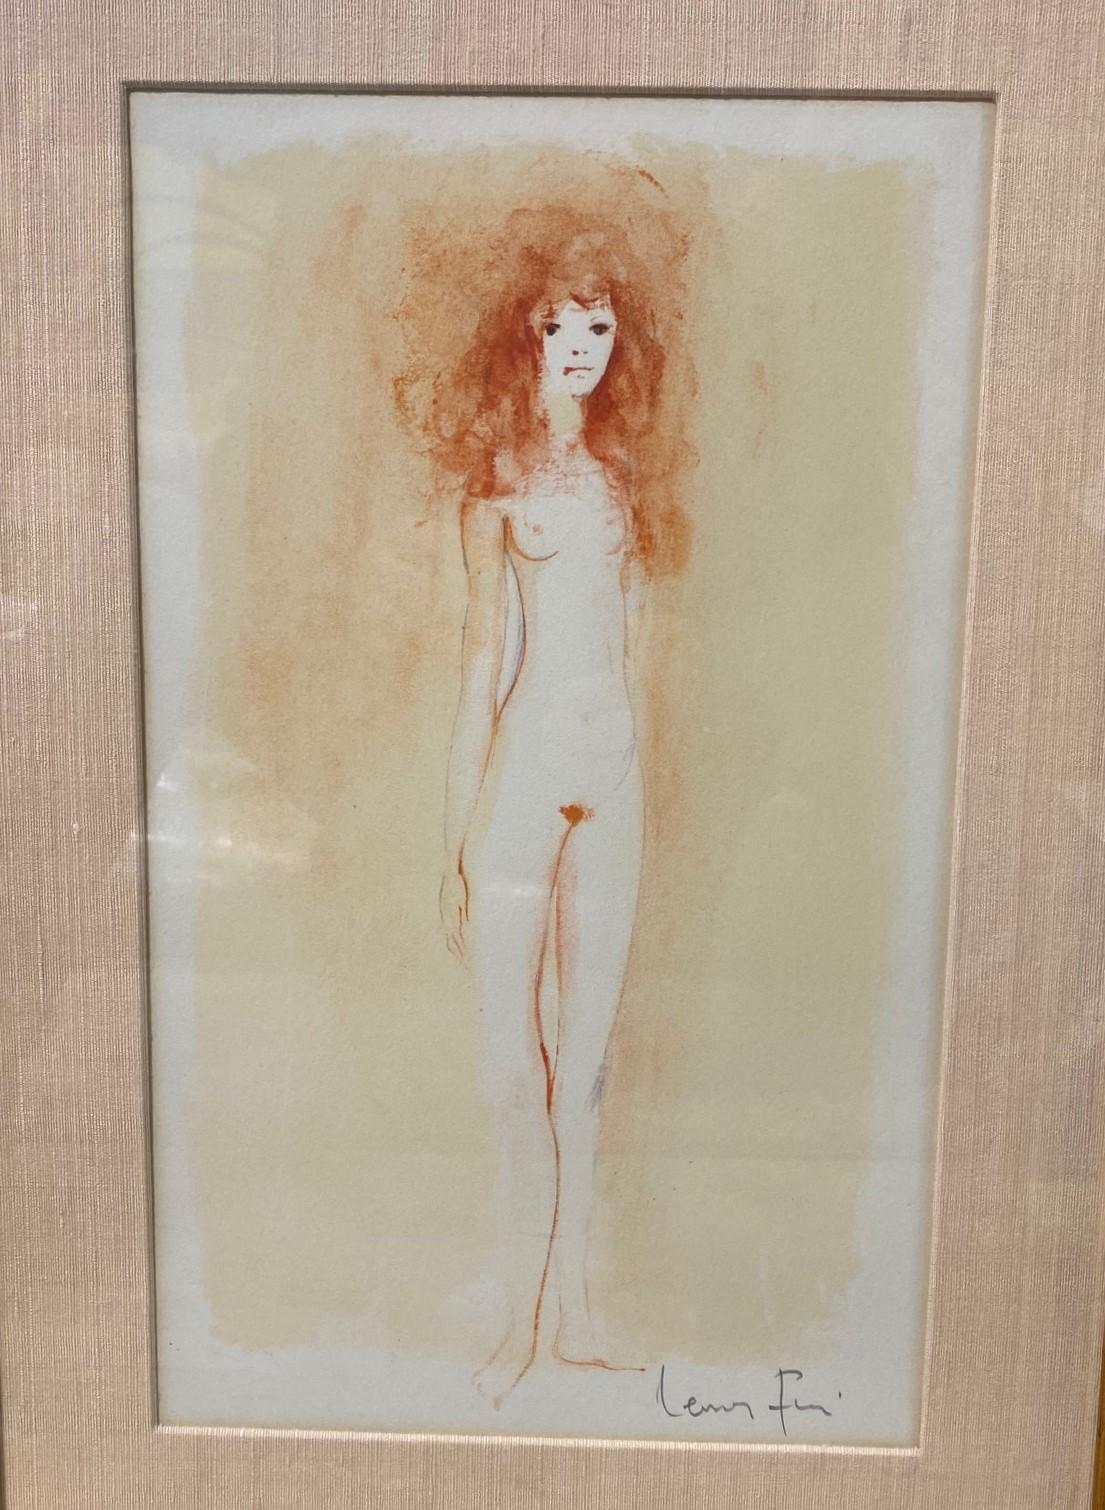 Signierter gerahmter Lithograh-Druck Femme Avec Cheveux Rouge von Leonor Fini, ca. 1970er Jahre (Moderne der Mitte des Jahrhunderts) im Angebot